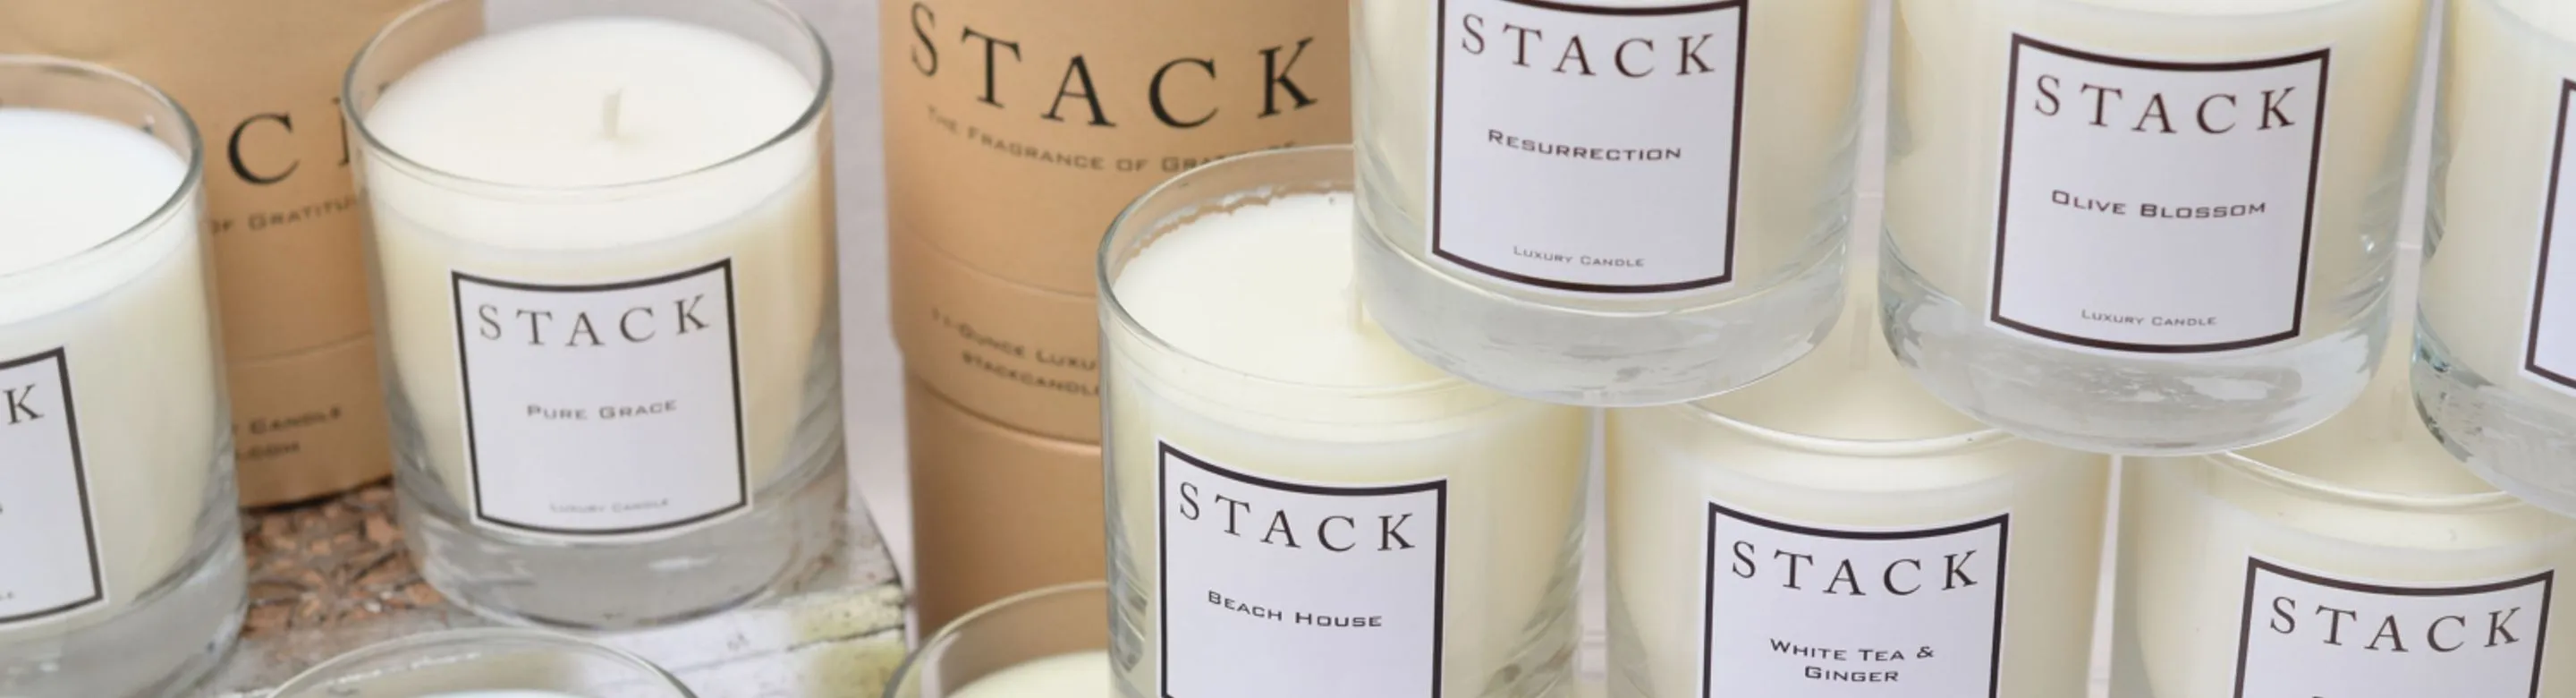 Stack Candles, LLC